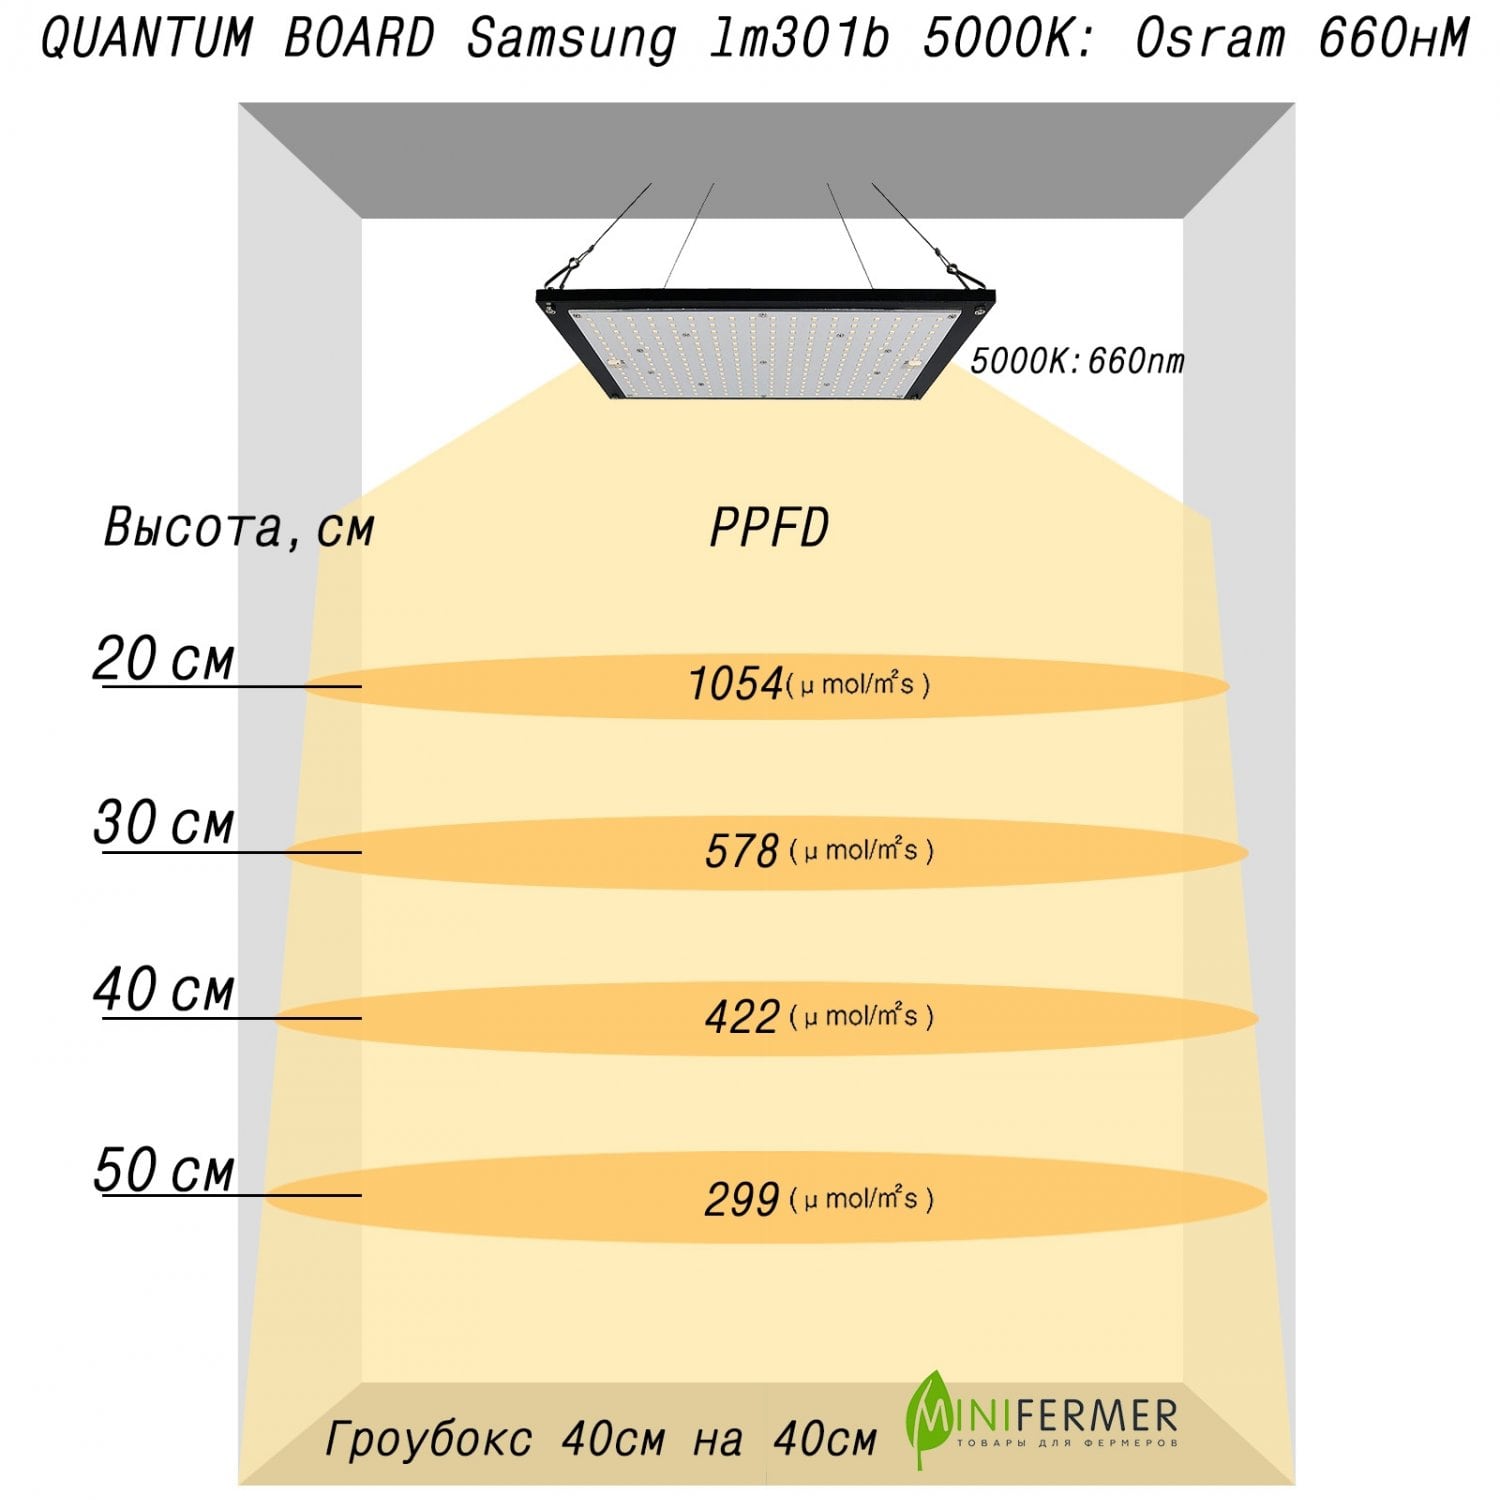 1.2 Quantum board Samsung lm301b 5000K + Osram SSL 660nm